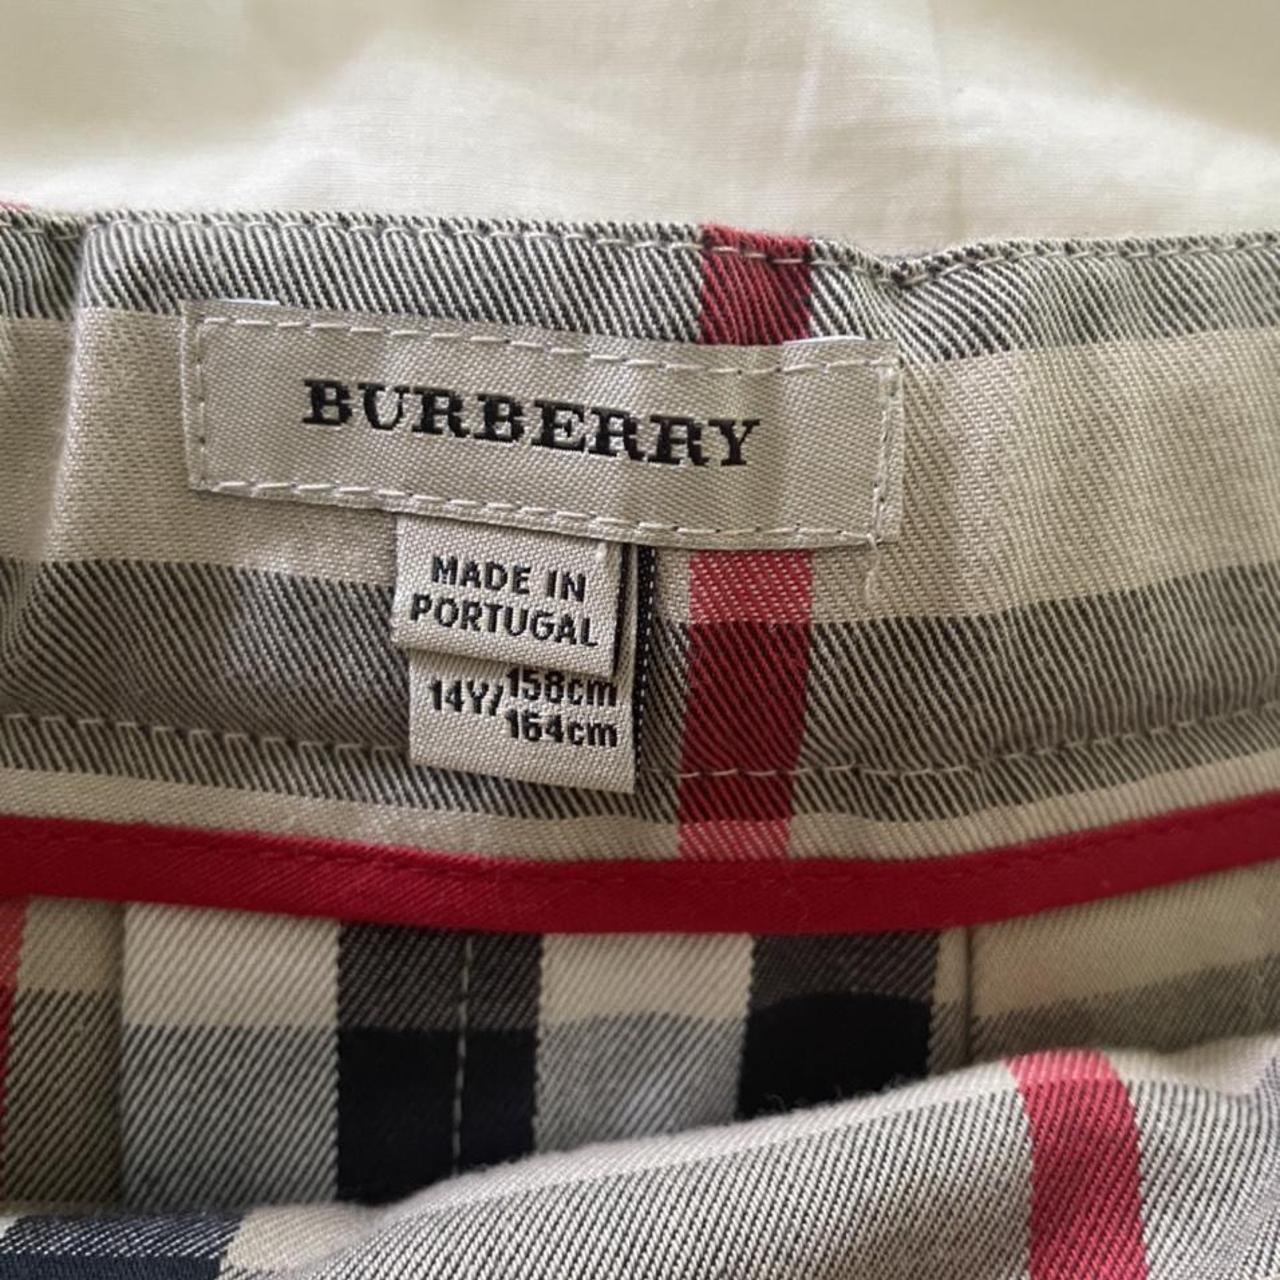 Vintage Burberry Plaid Mini Skirt #burberry... - Depop